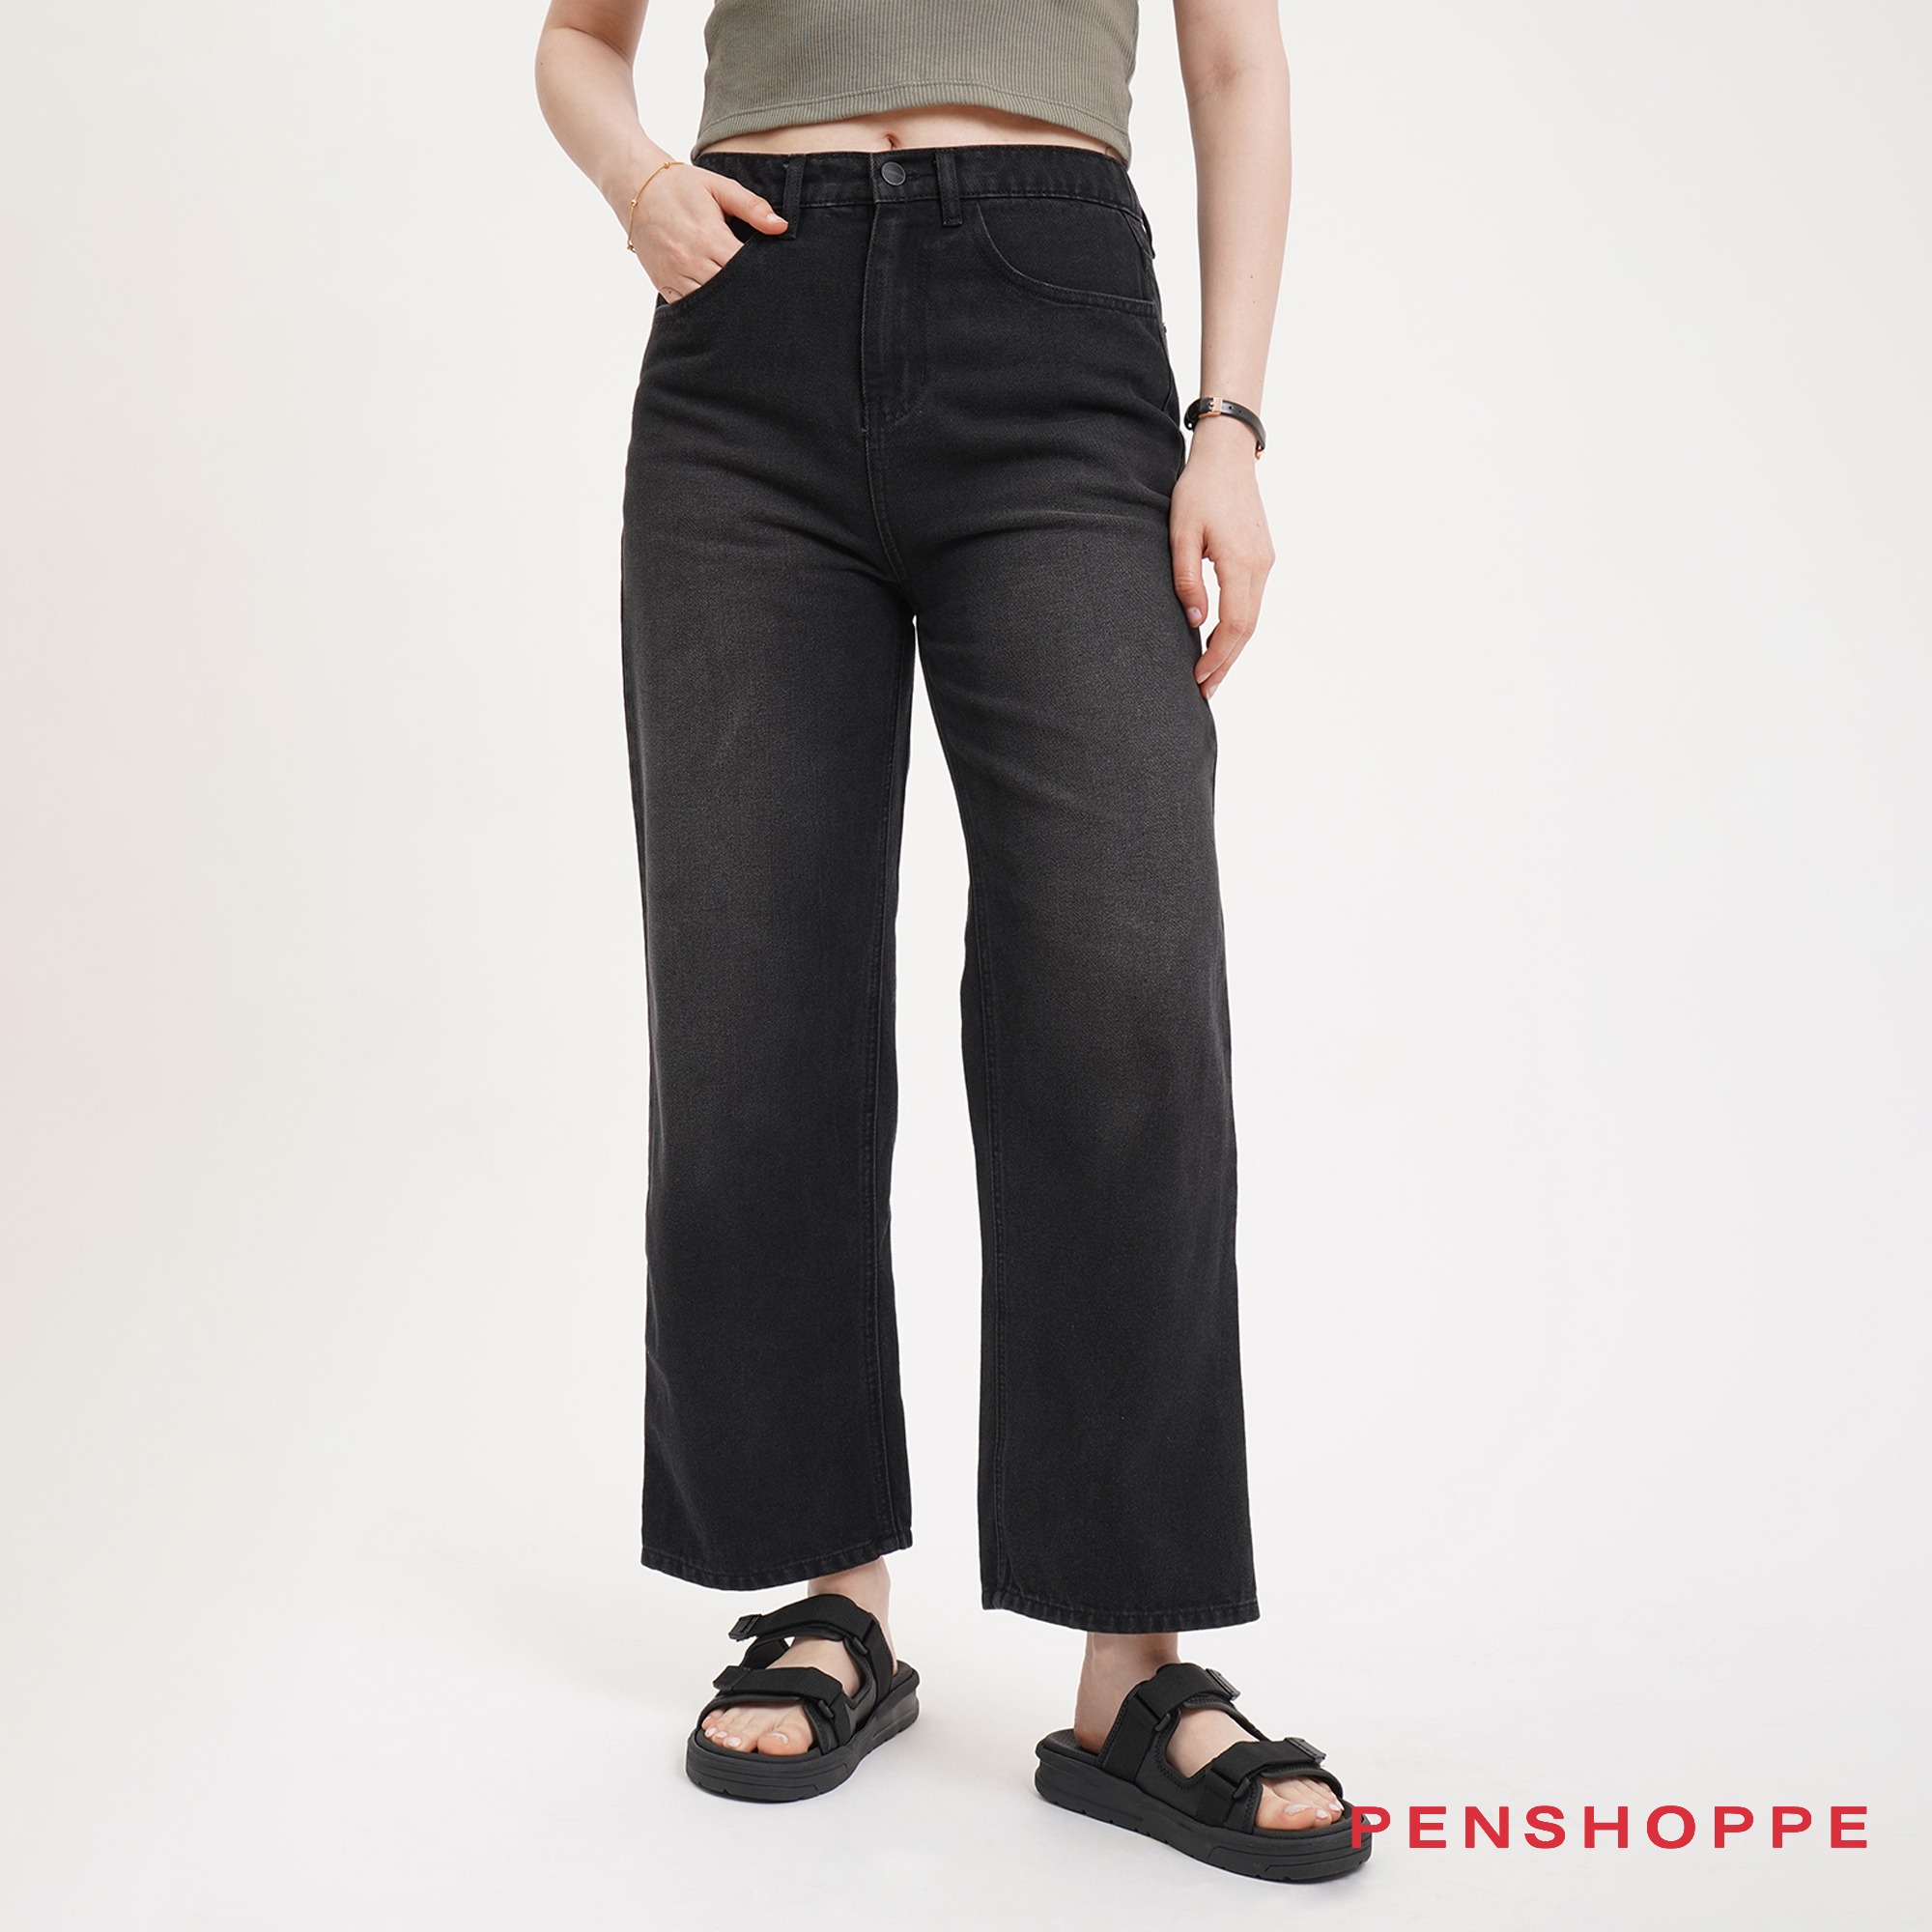 Penshoppe Move Track Pants With Side Stripes - ShopperBoard